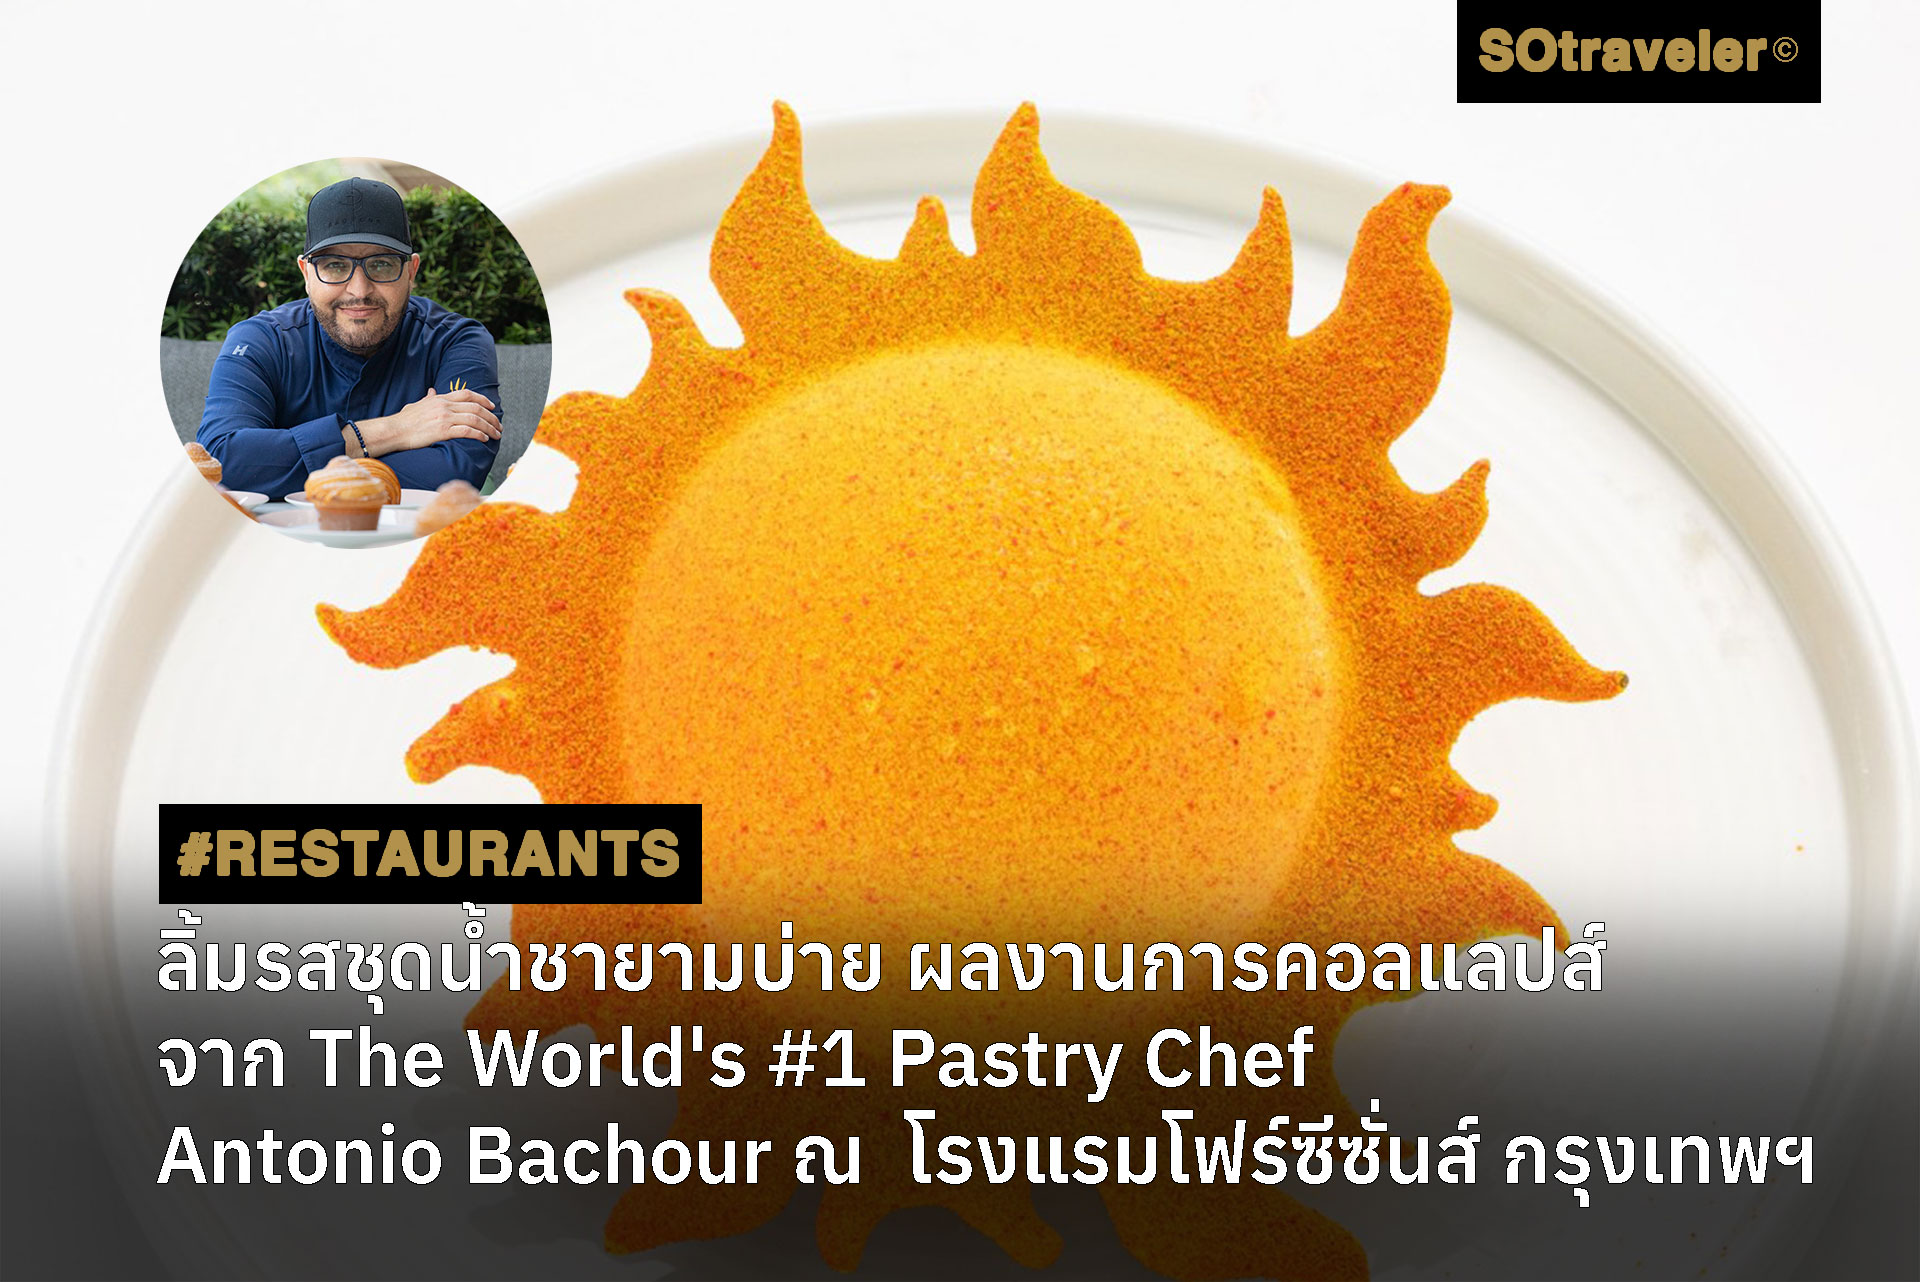 Worlds 1 Pastry Chef ANTONIO BACHOUR JOINS Four Seasons Bangkok